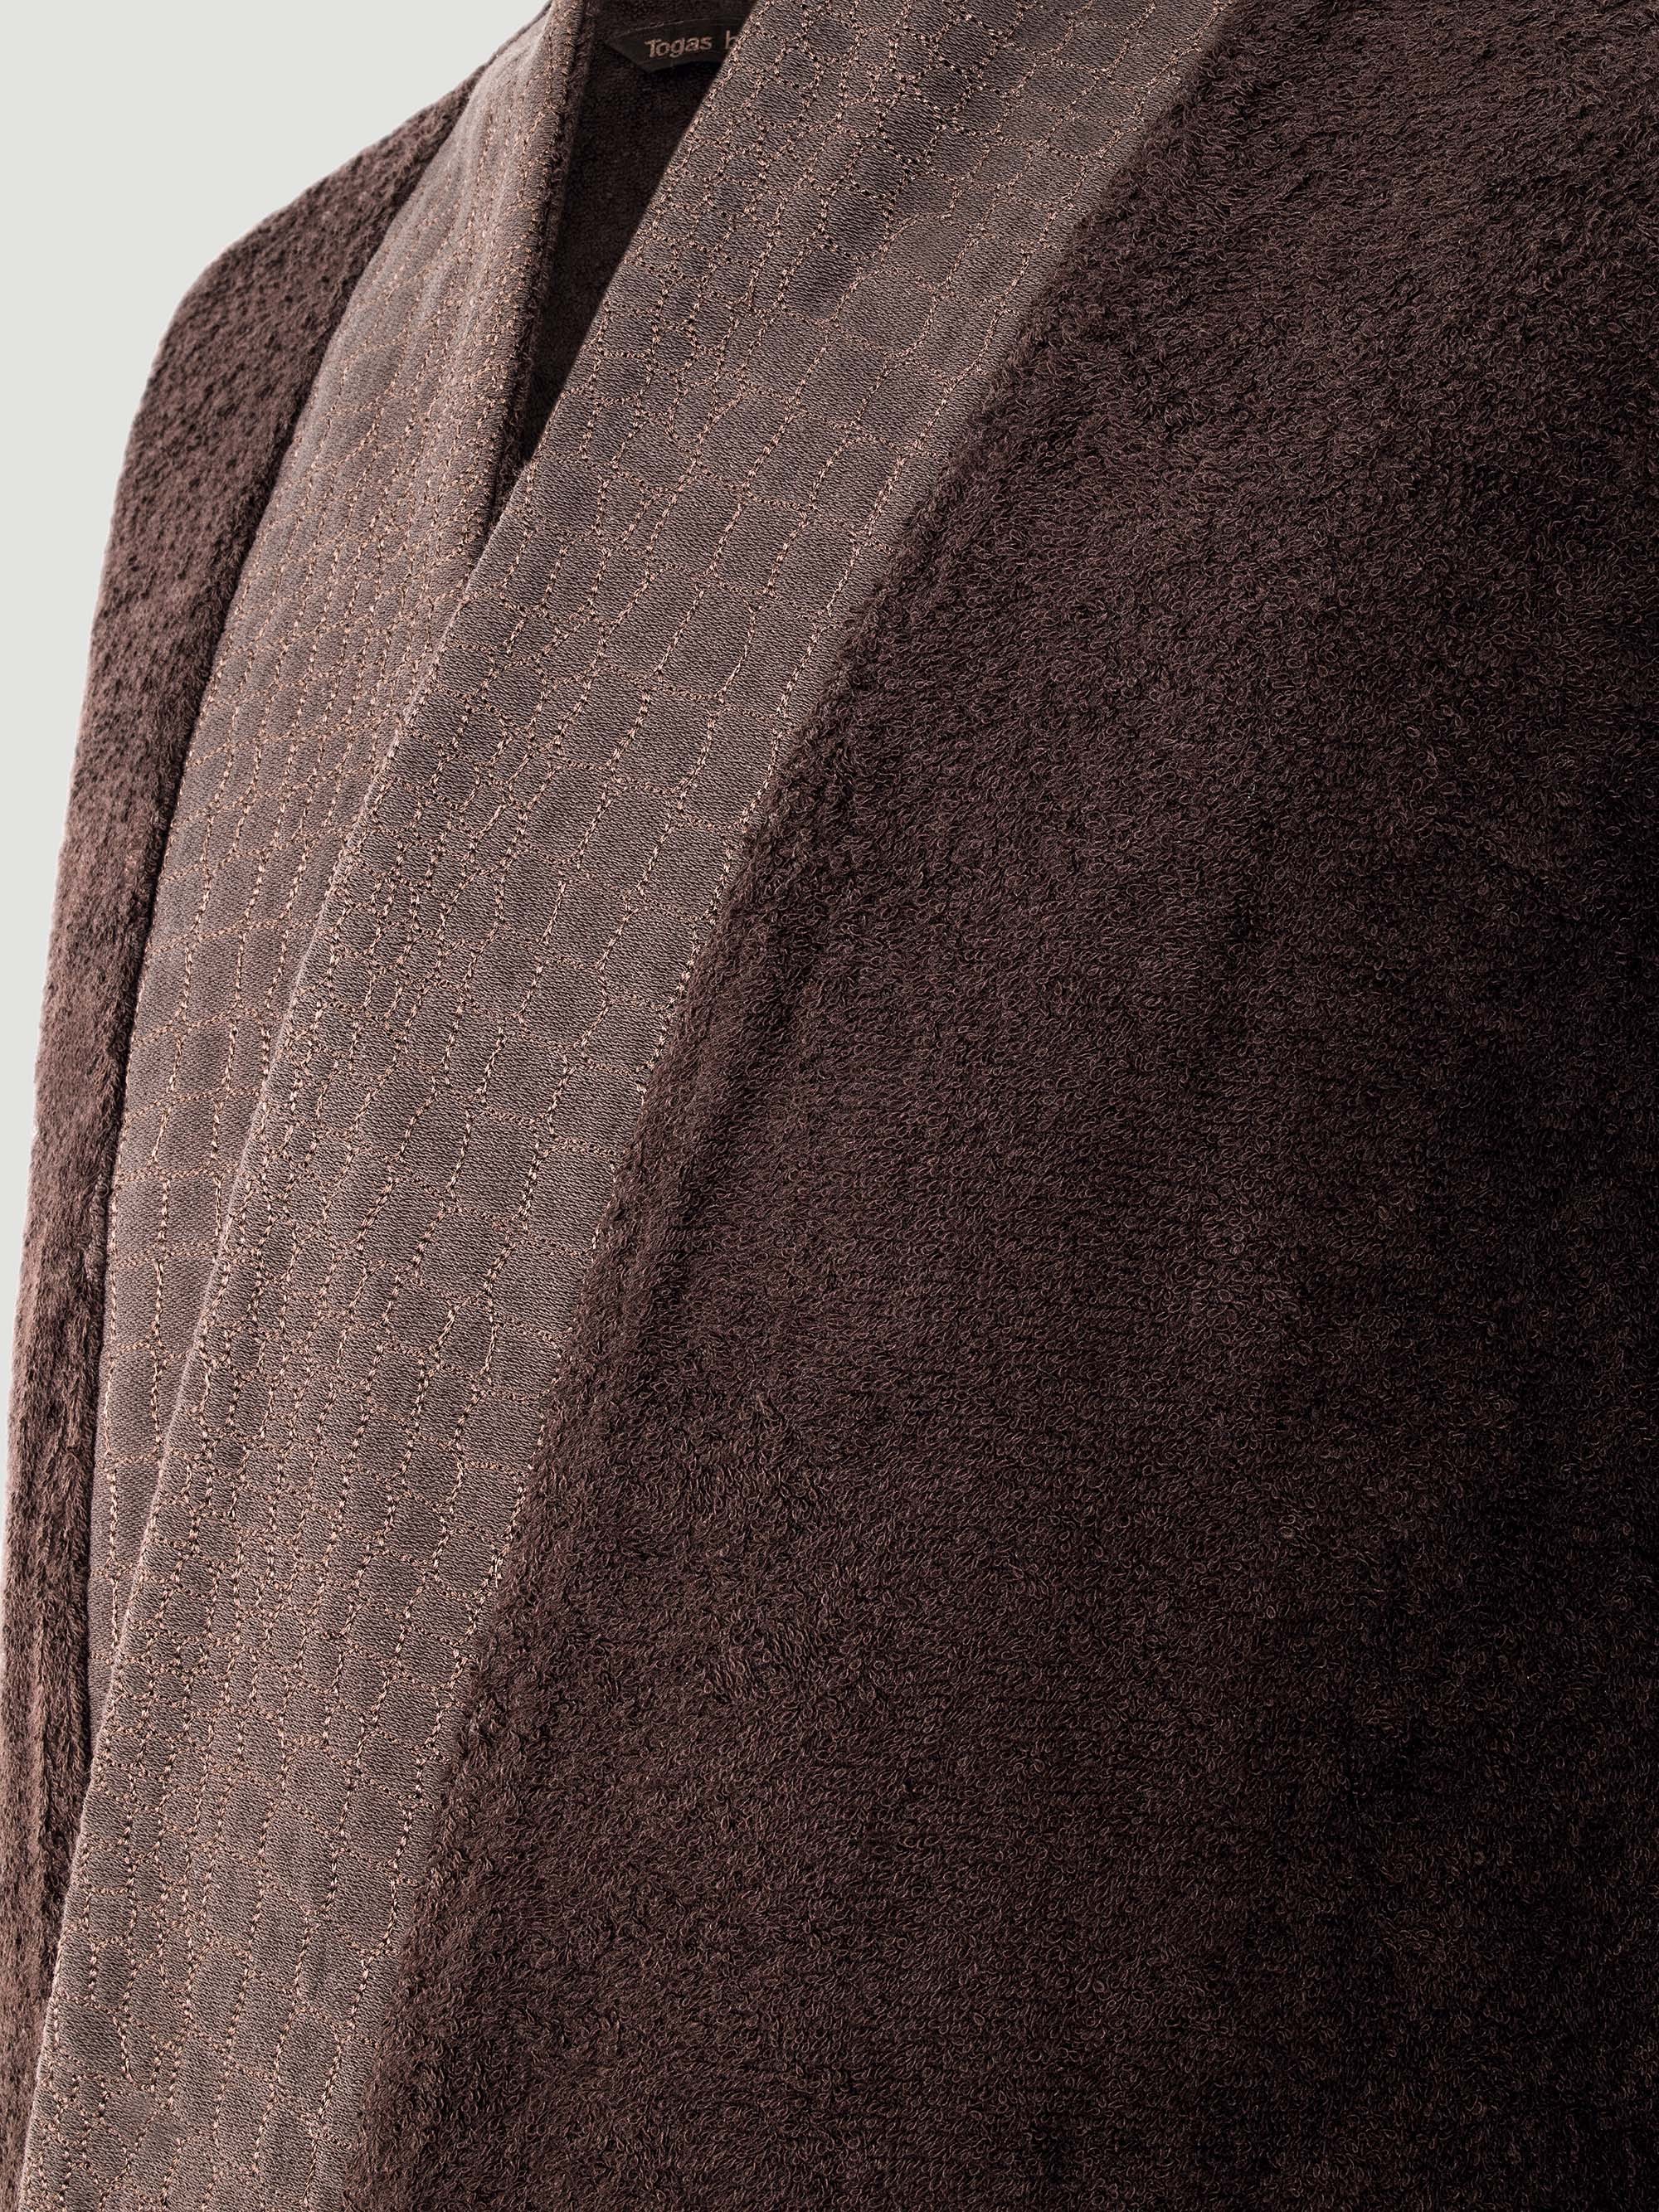 Мужские халаты Халат мужской Конолли  - Фото